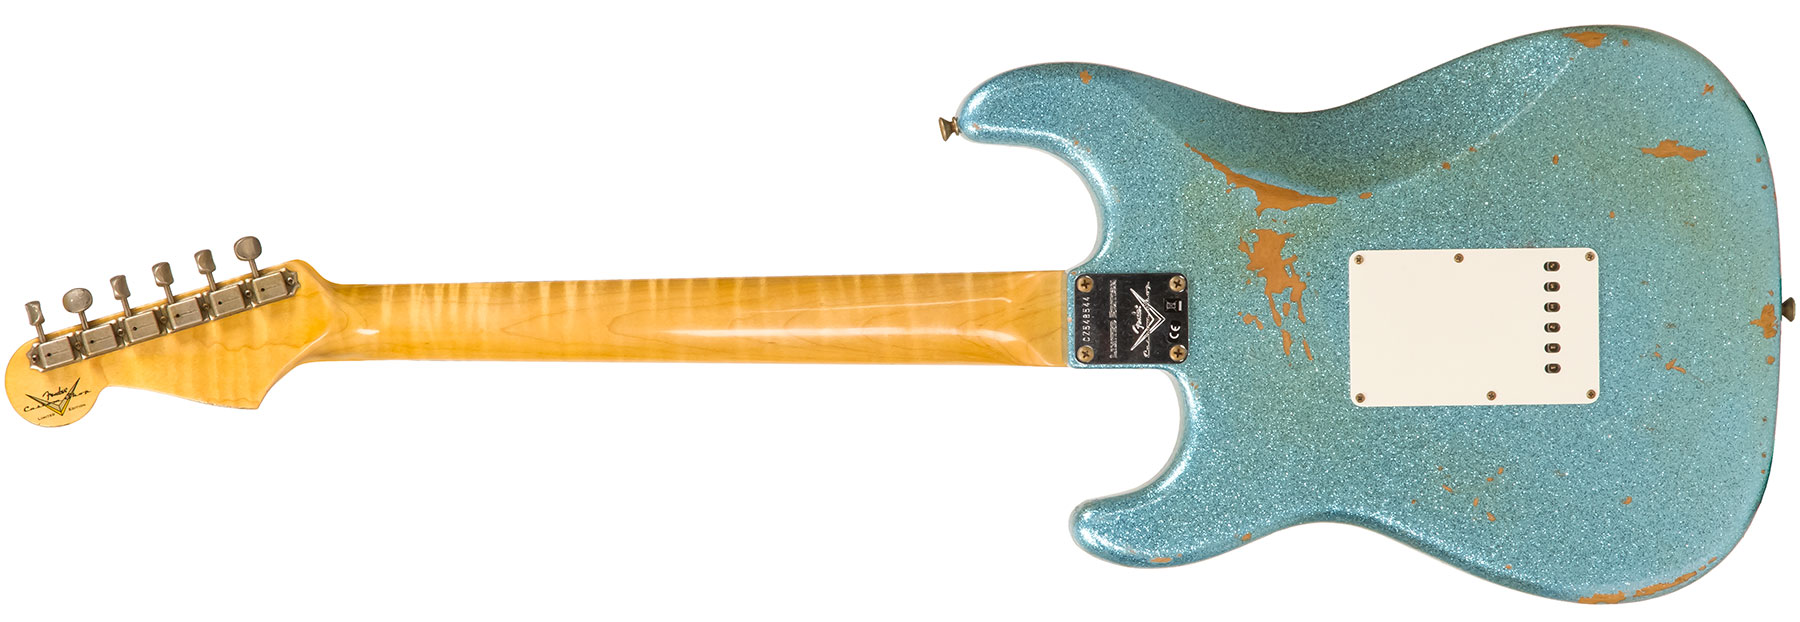 Fender Custom Shop Strat 1965 Ltd Usa Rw #cz548544 - Relic Daphne Blue Sparkle - Guitarra eléctrica con forma de str. - Variation 1